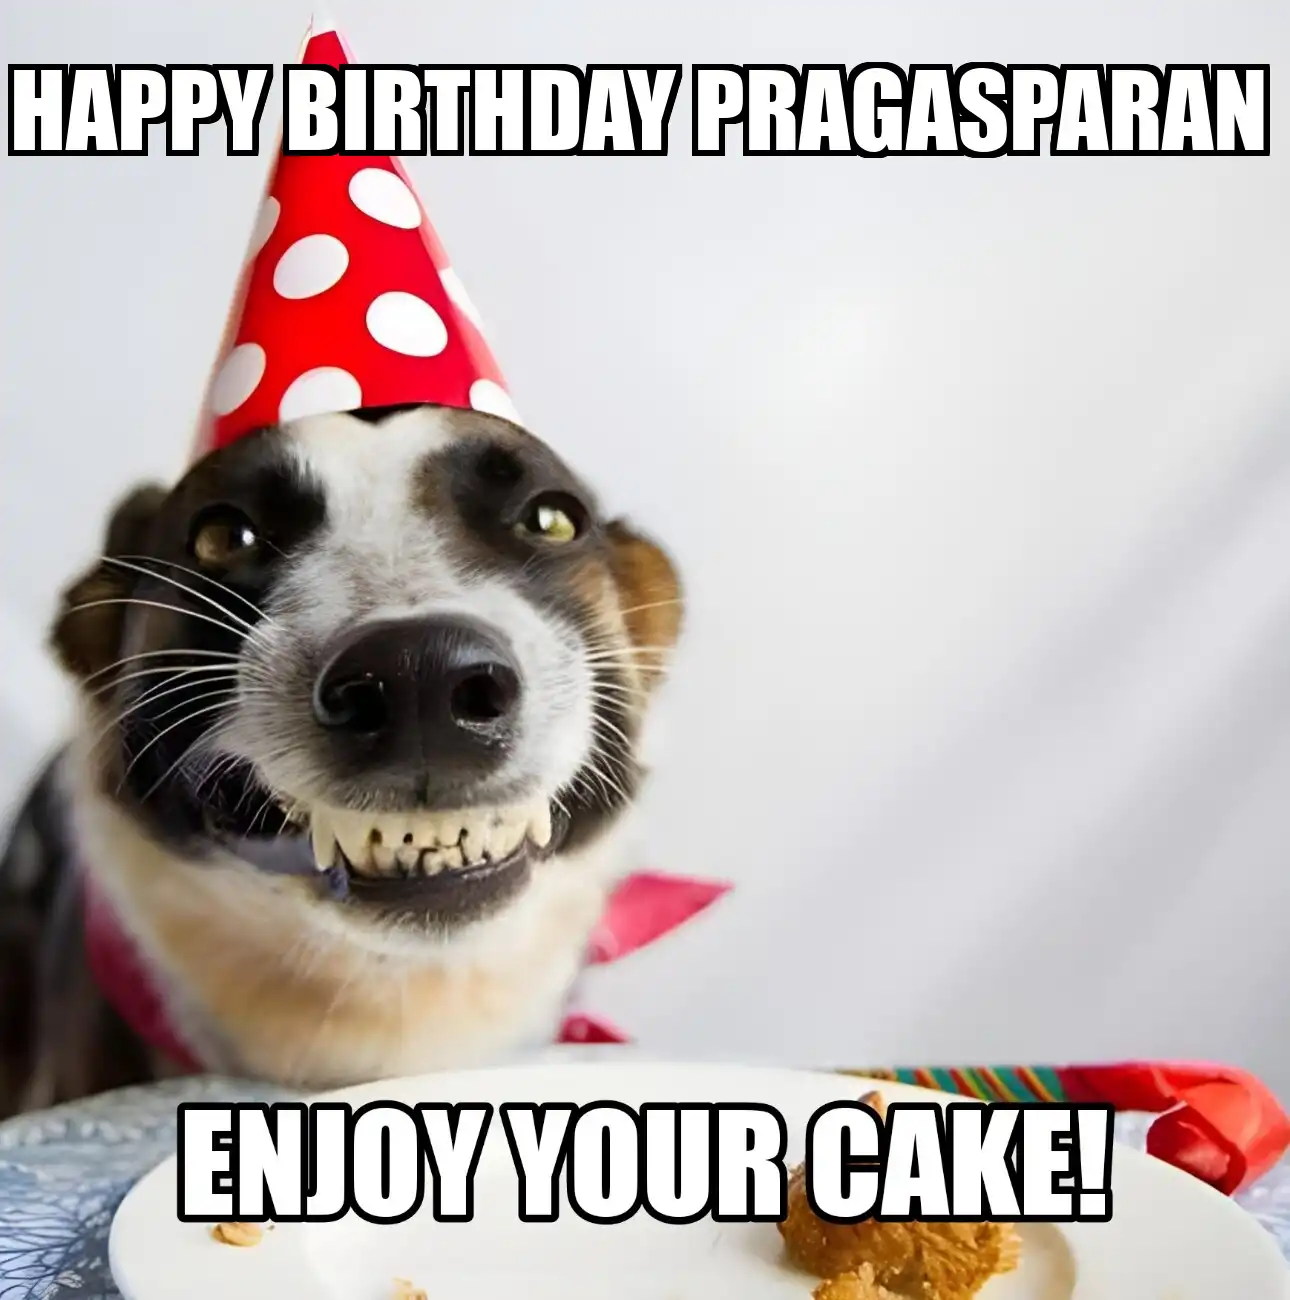 Happy Birthday Pragasparan Enjoy Your Cake Dog Meme